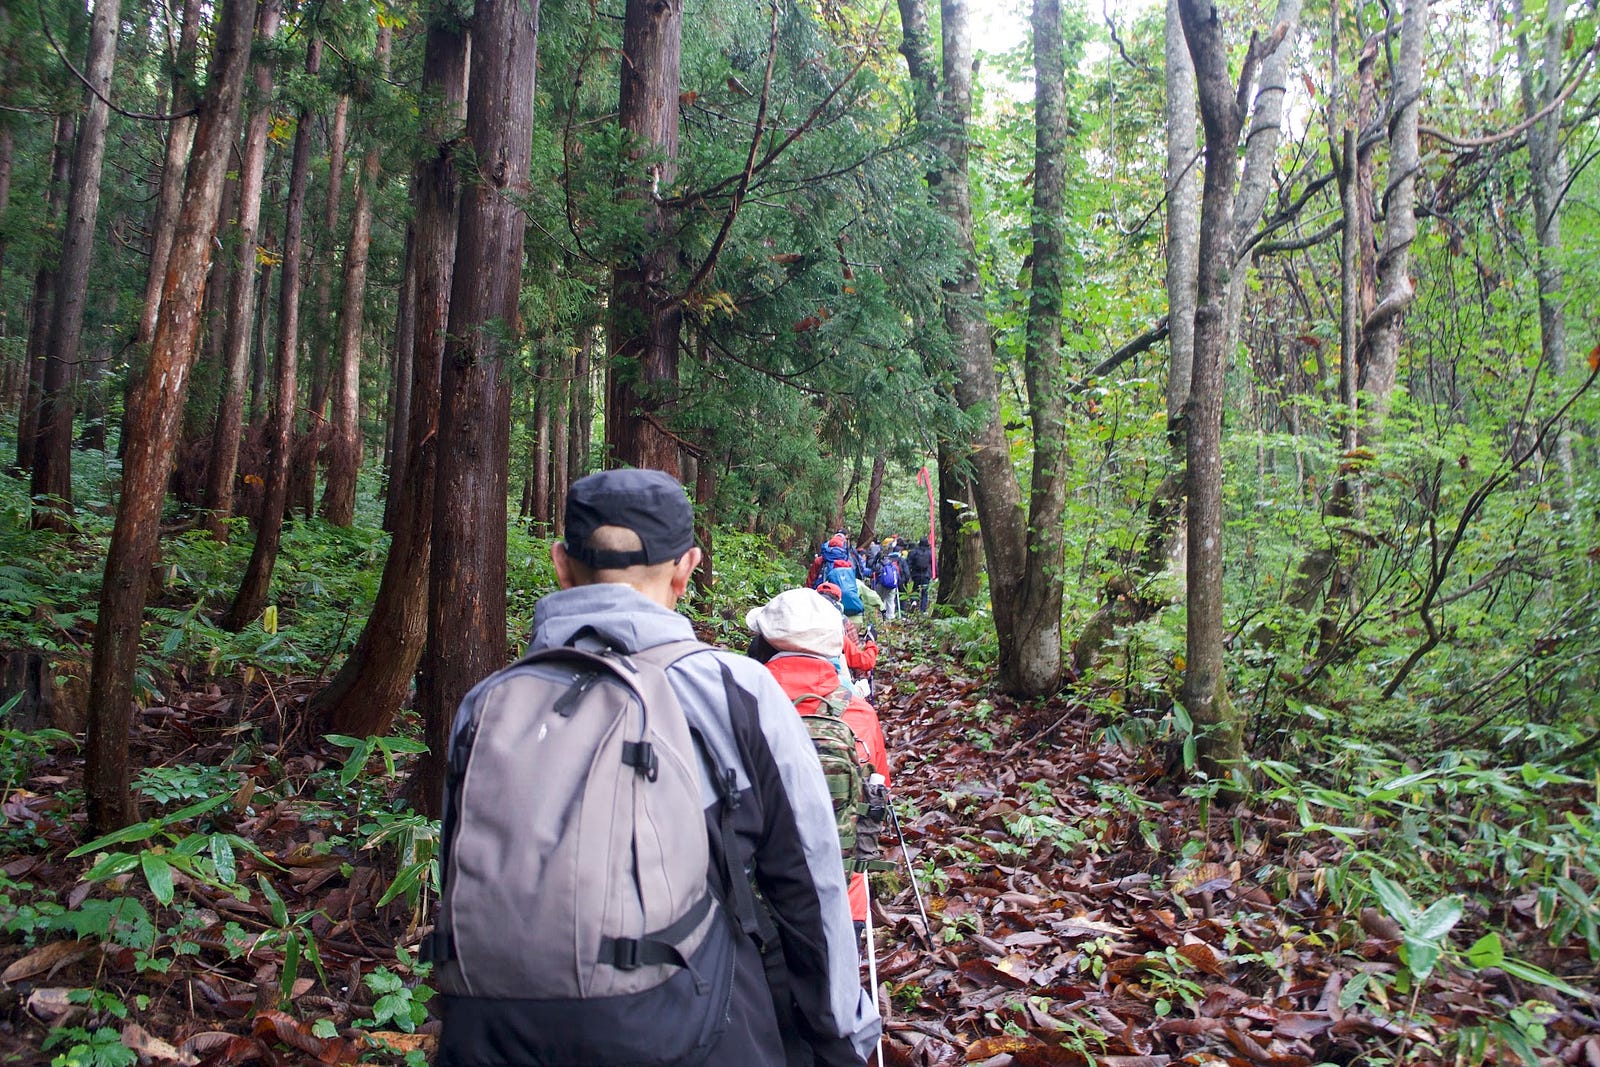 Hikers walk the cedar forest towards Tate-iwa rock that links to the Hata Trail on Murayama Ha-yama